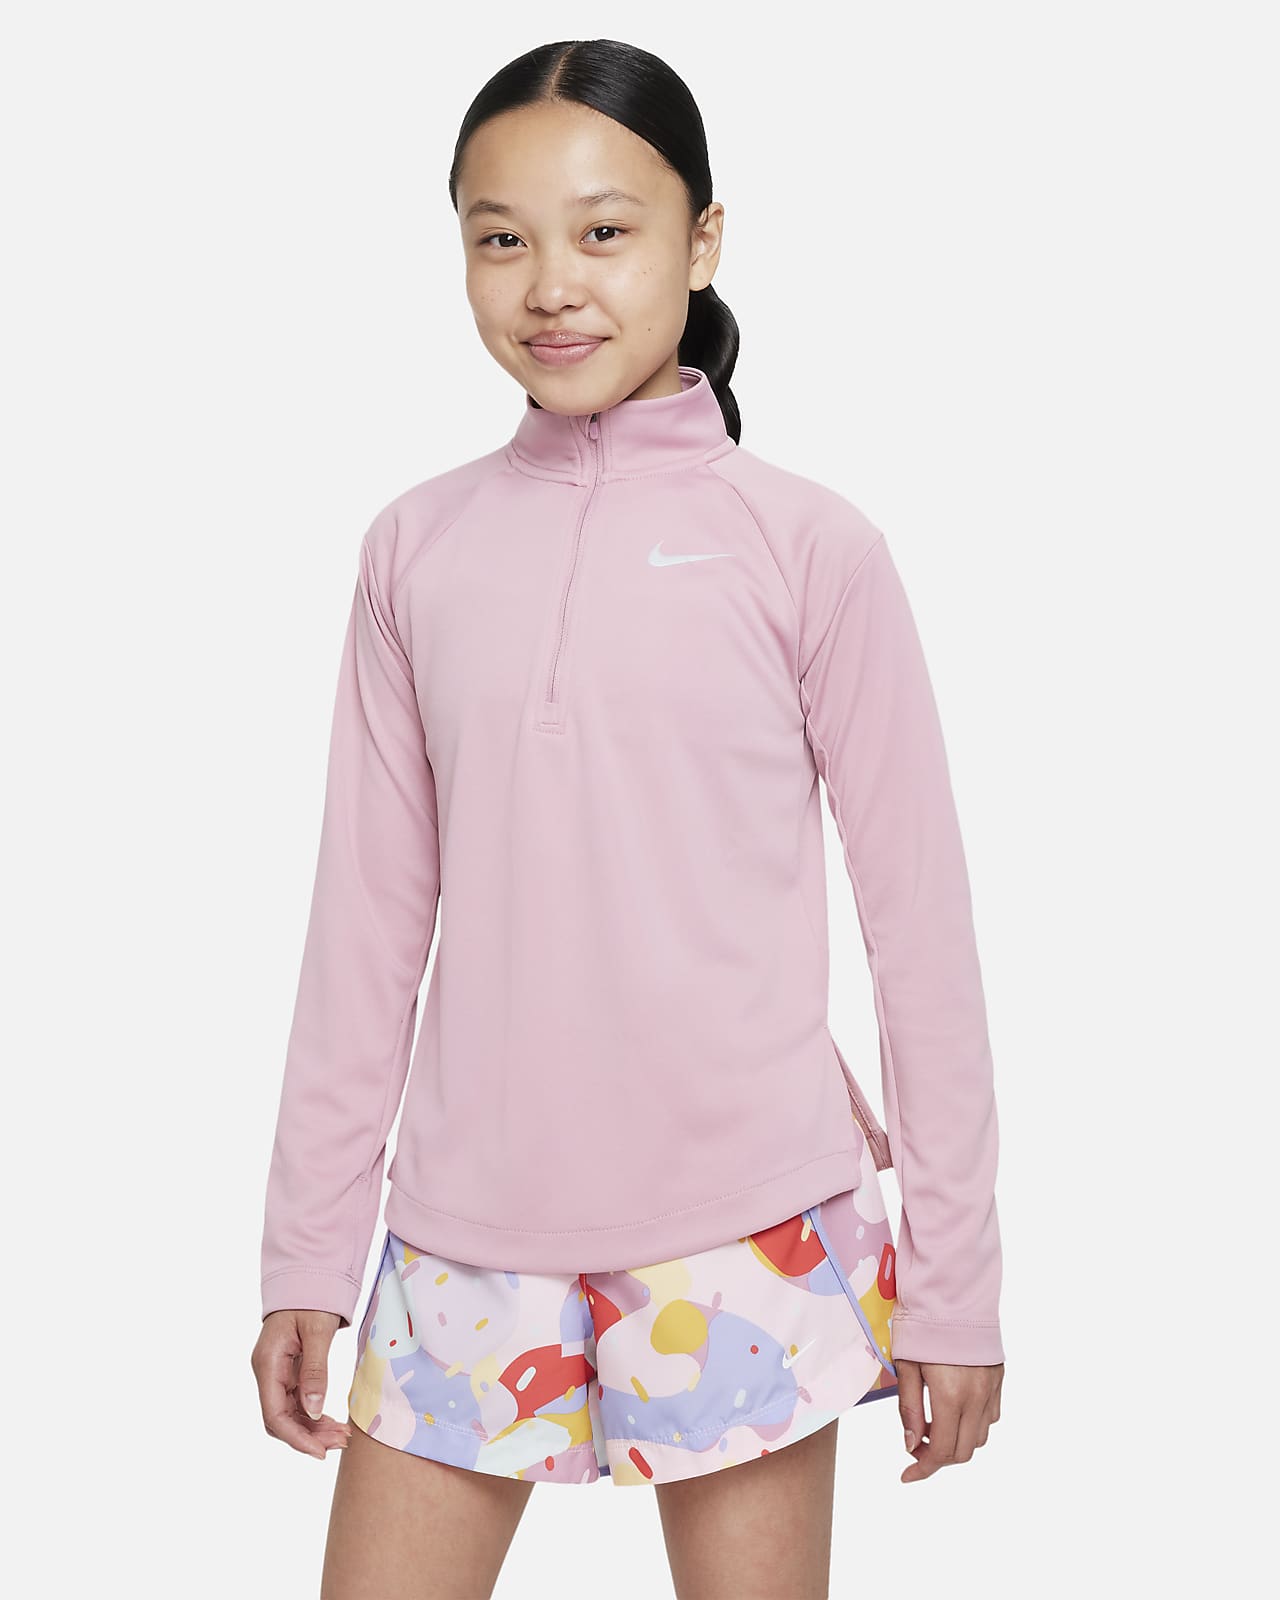 Nike Girls' Dri-FIT Long-Sleeve Top. Nike PH